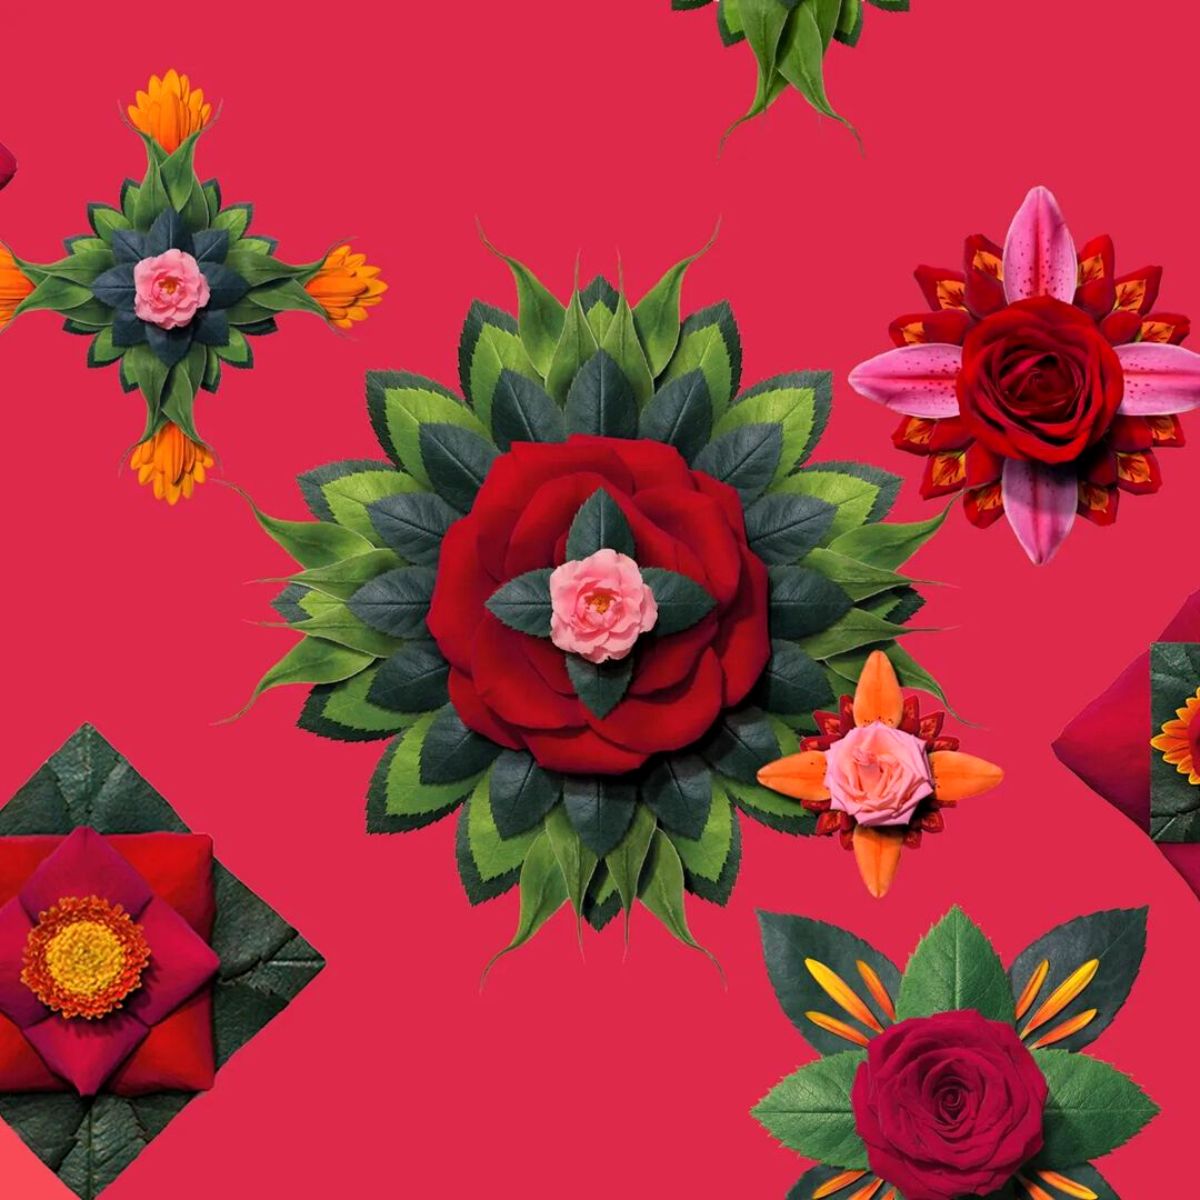 raku inoue crafts iconic fashion brand patterns from bright flower